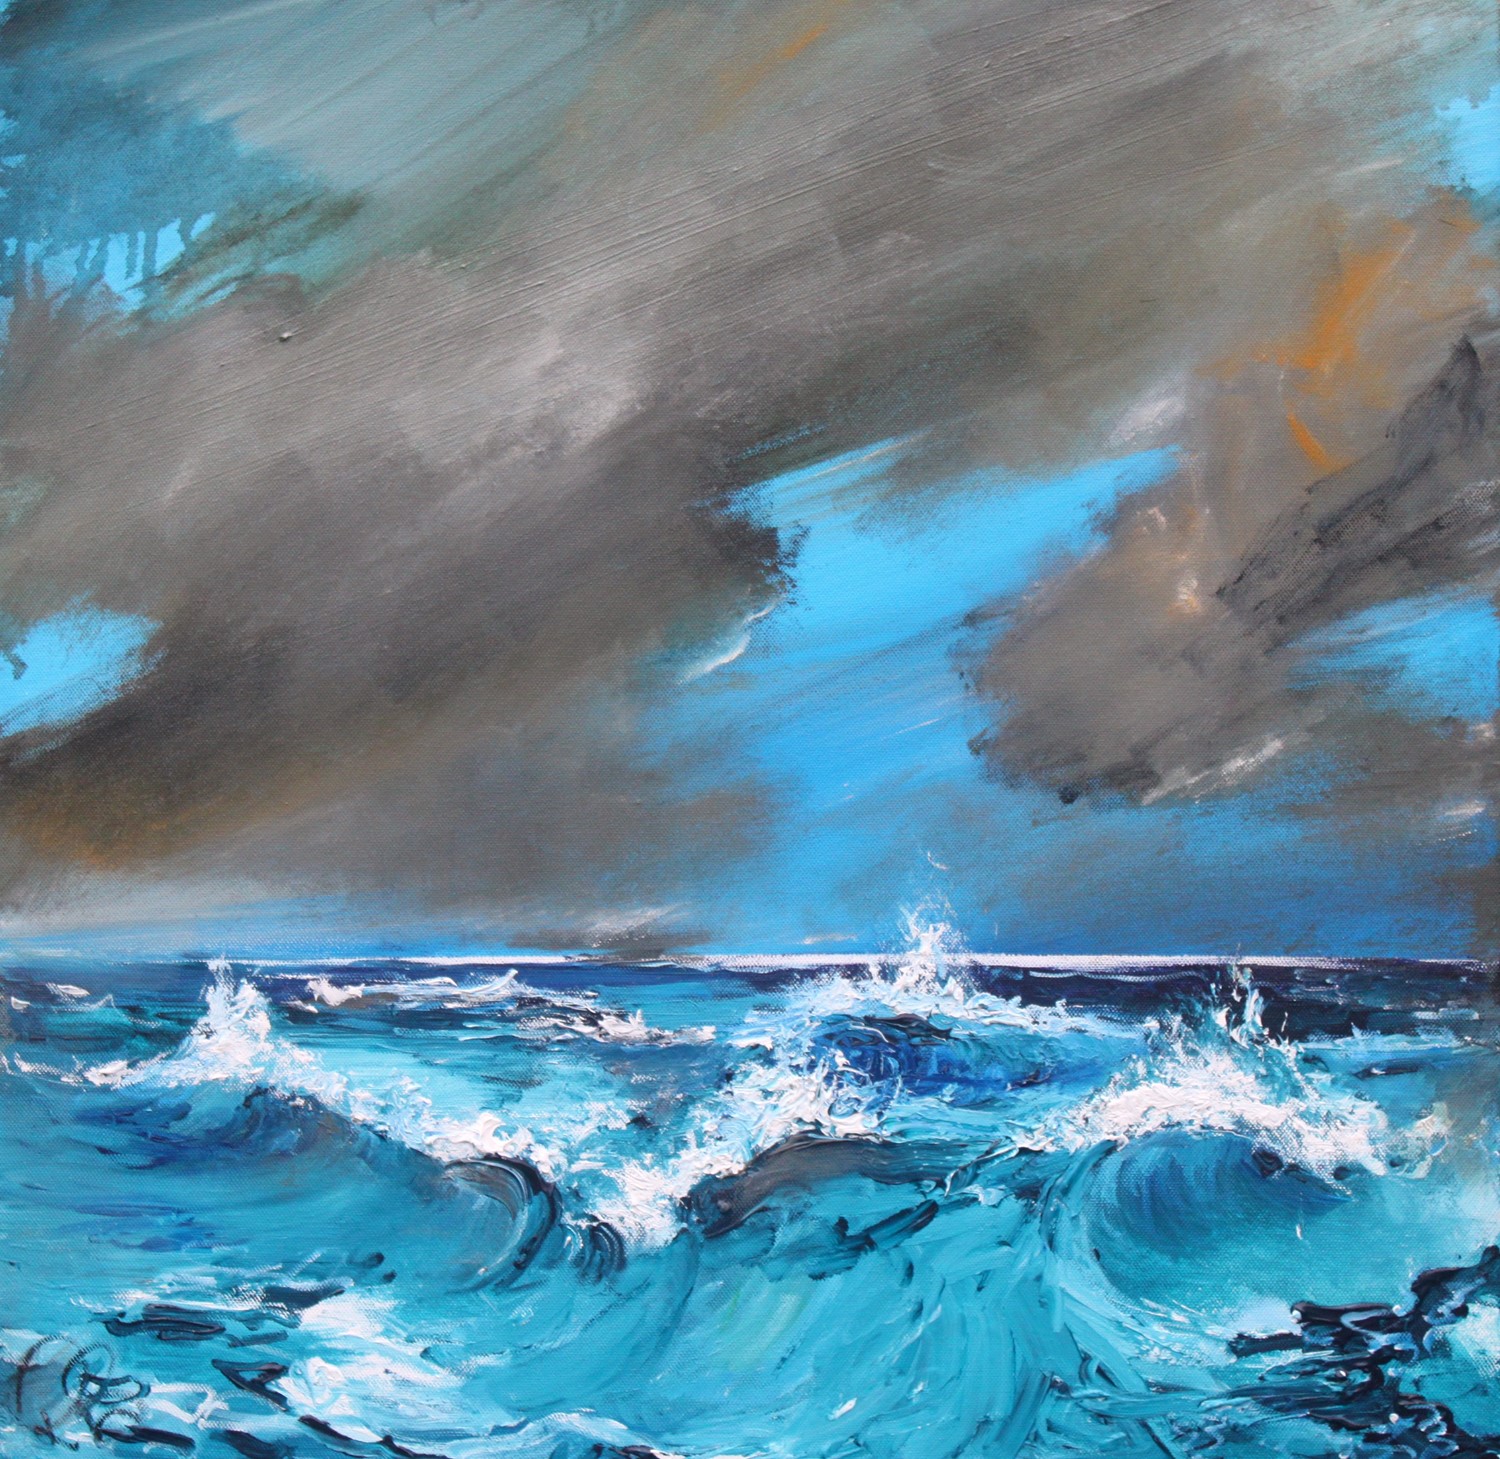 'Blustering Waves' by artist Rosanne Barr